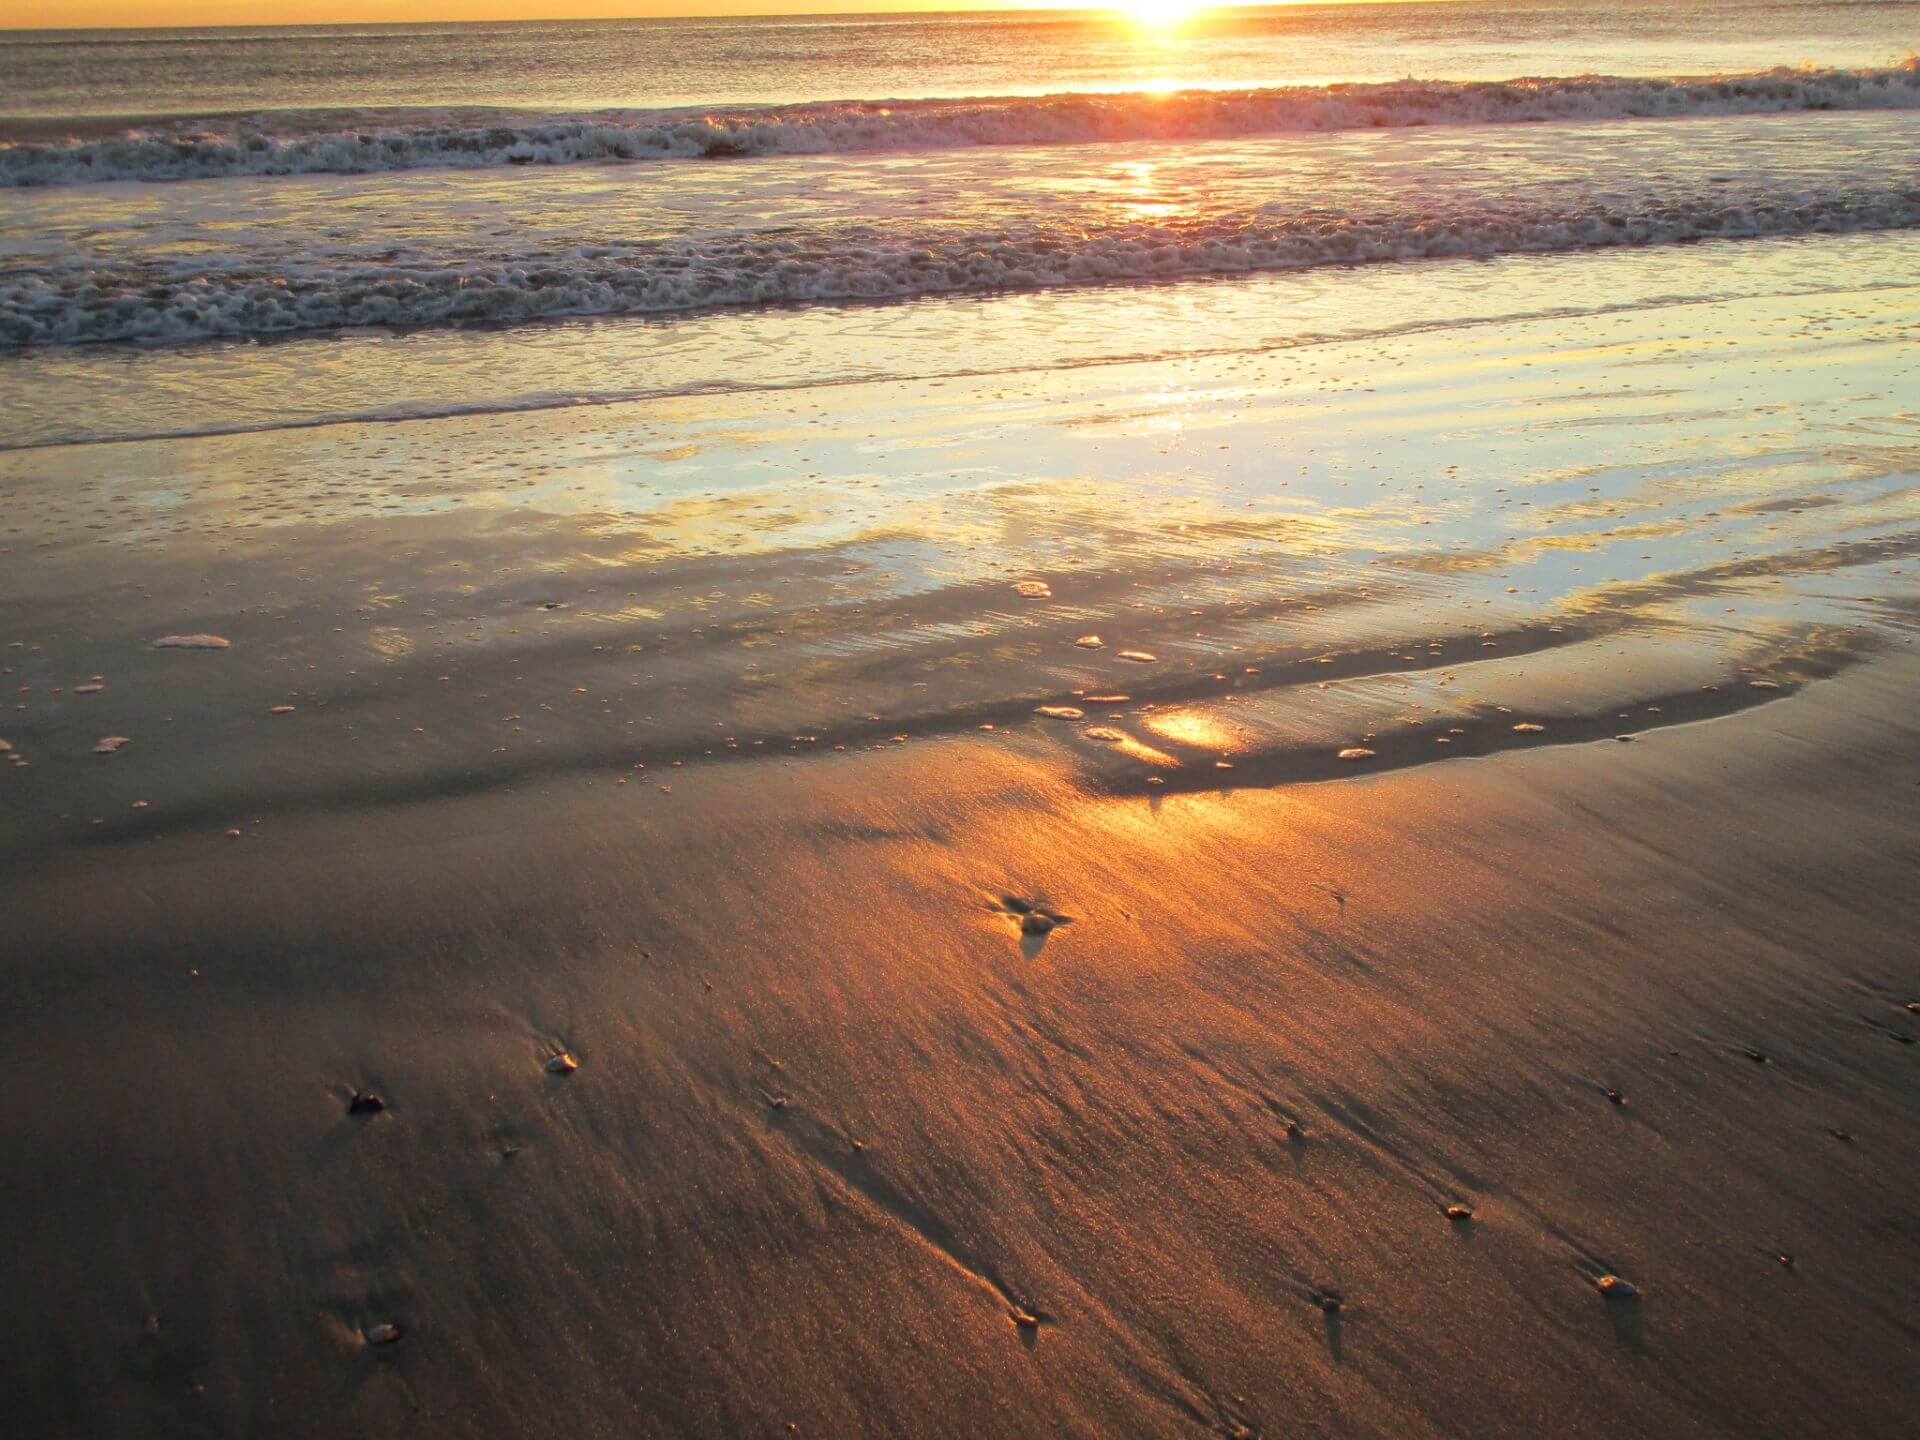 ocean sunset reflecting golden on the sand